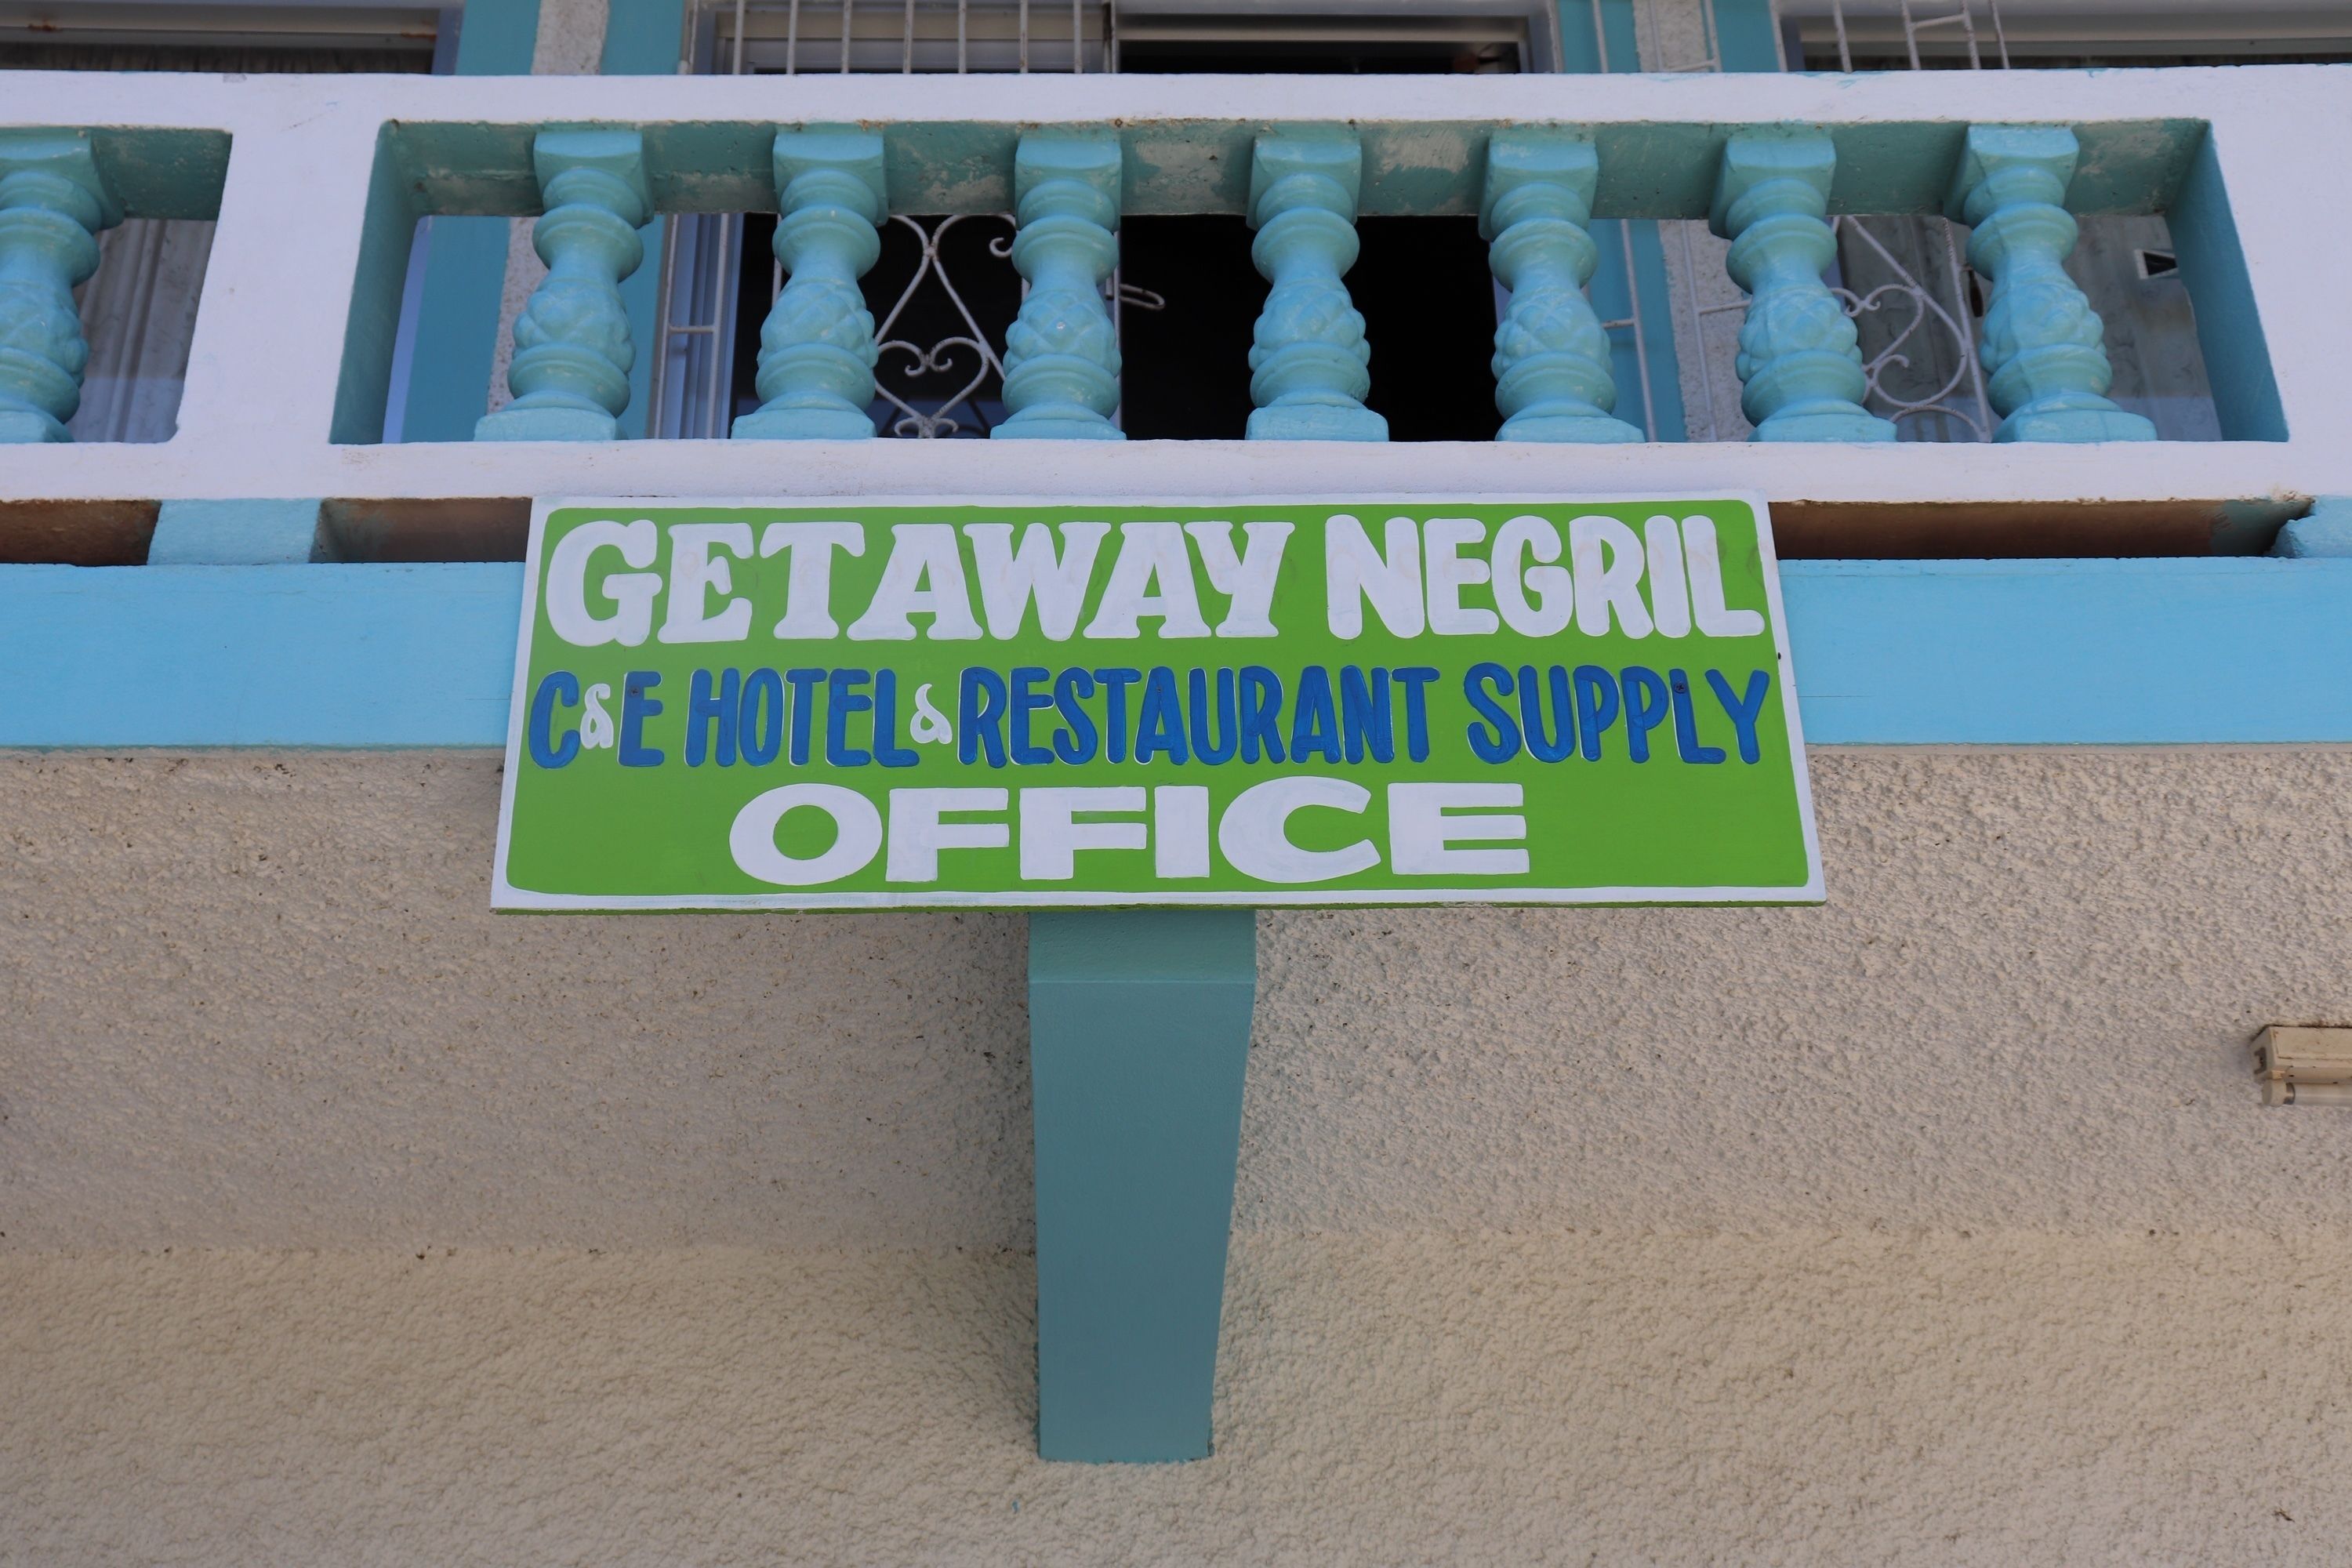 Getaway Negril